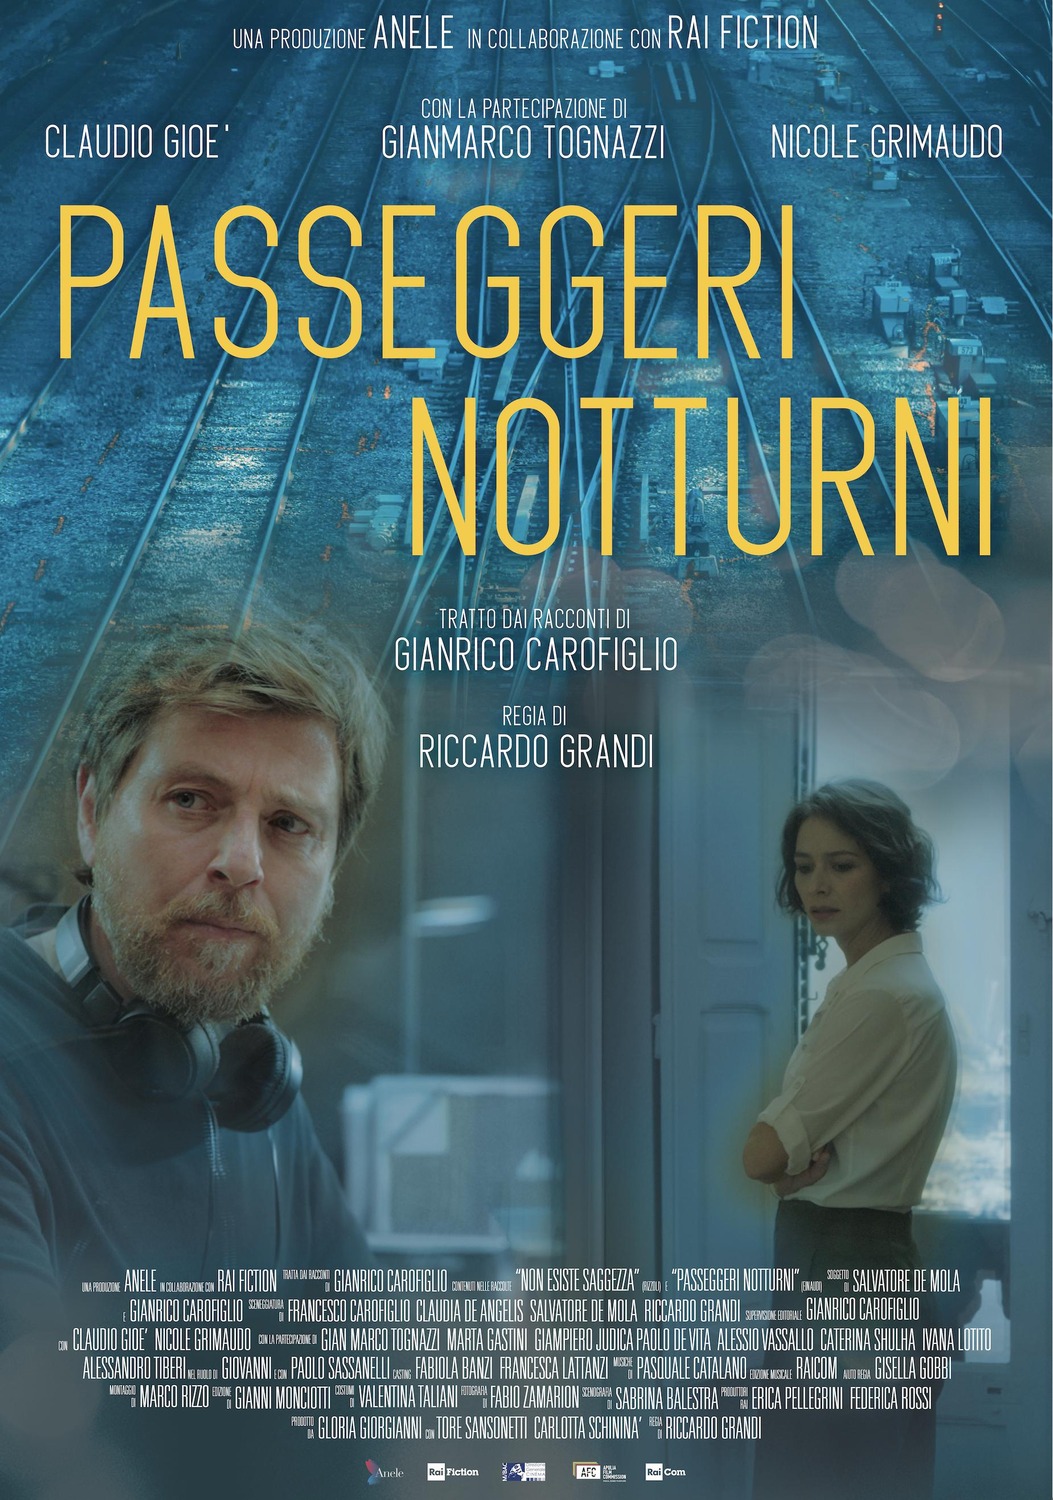 Extra Large Movie Poster Image for Passeggeri notturni 